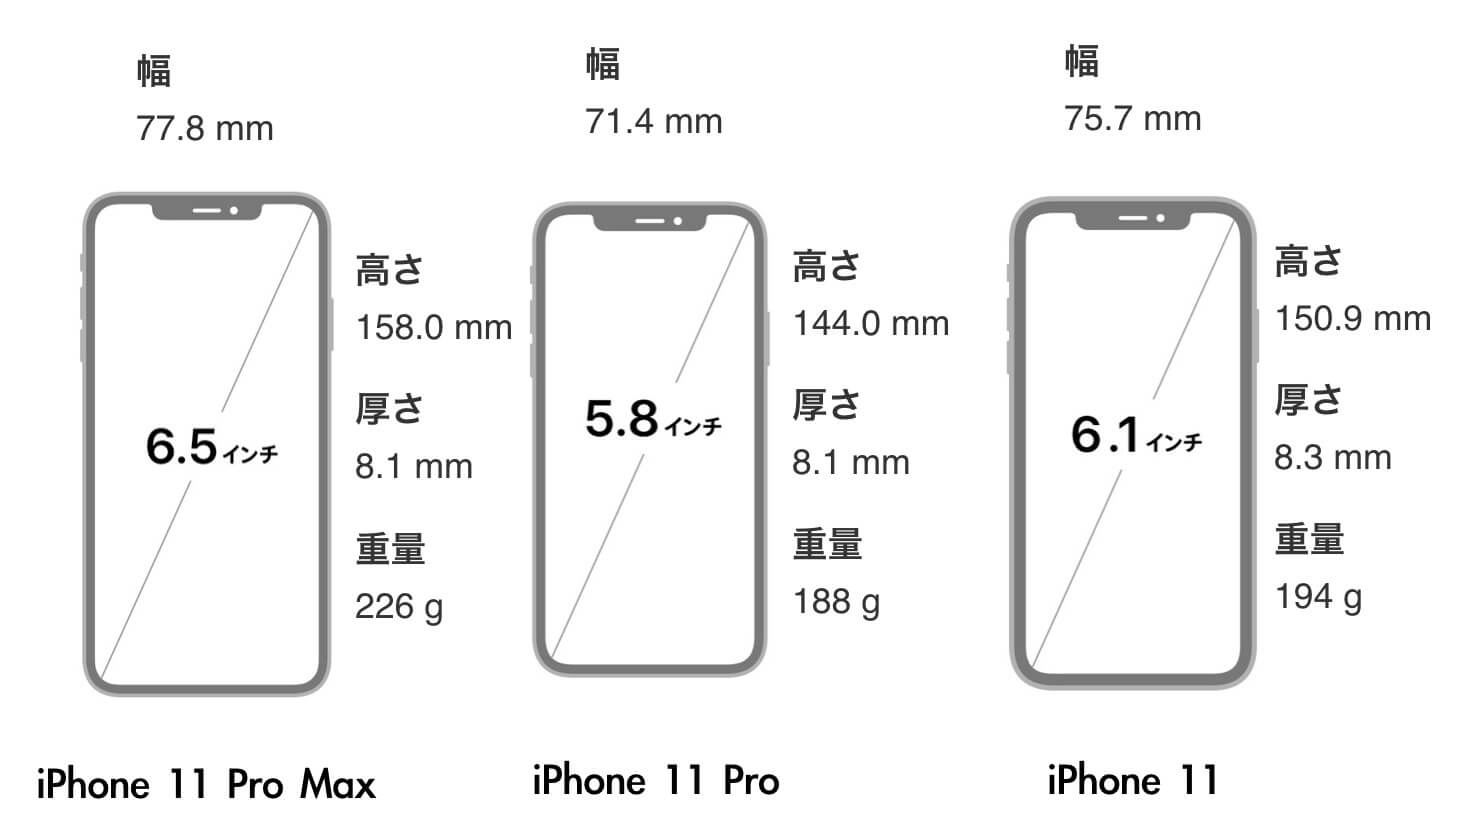 Iphone 11 Pro Max размер дисплея. Iphone 11 Pro размер в дюймах. Айфон 11 размер экрана в сантиметрах. Айфон 11 габариты диагональ.